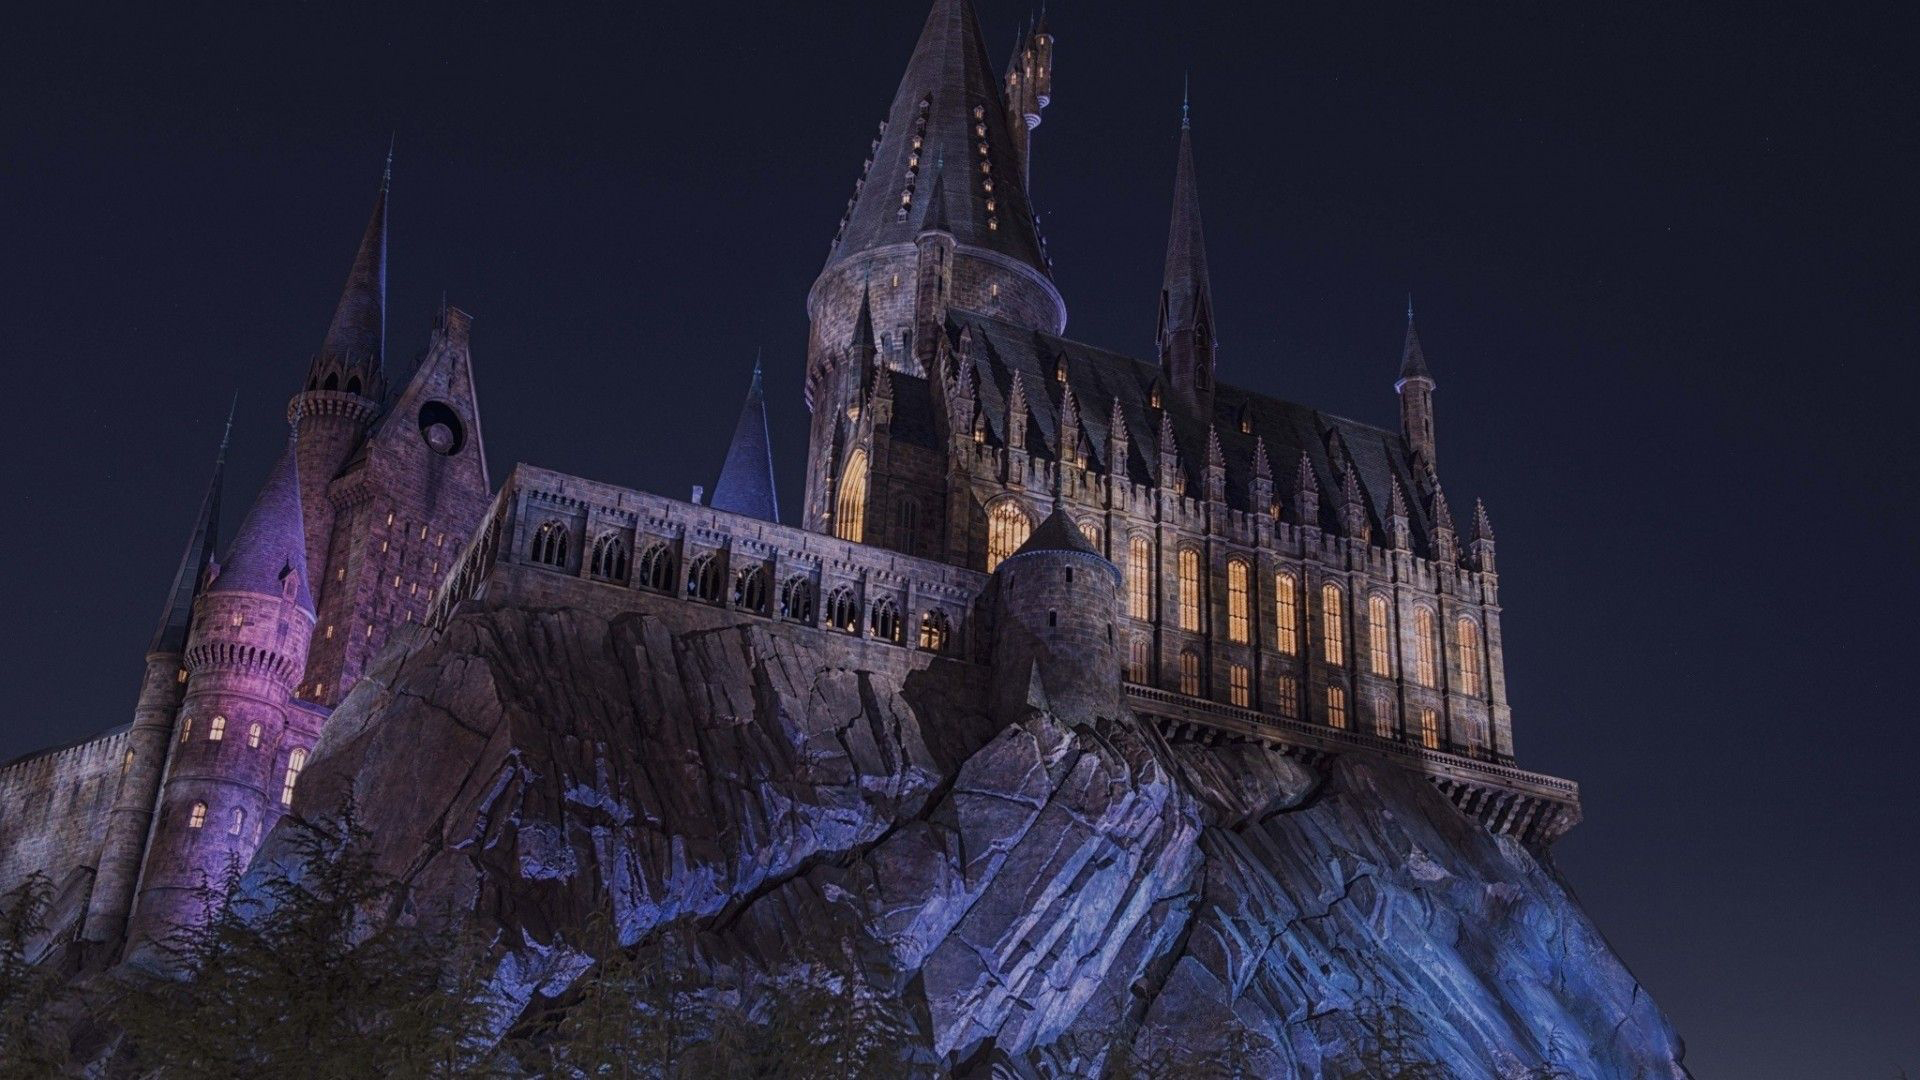 Hogwarts on K of mountain during nighttime hd